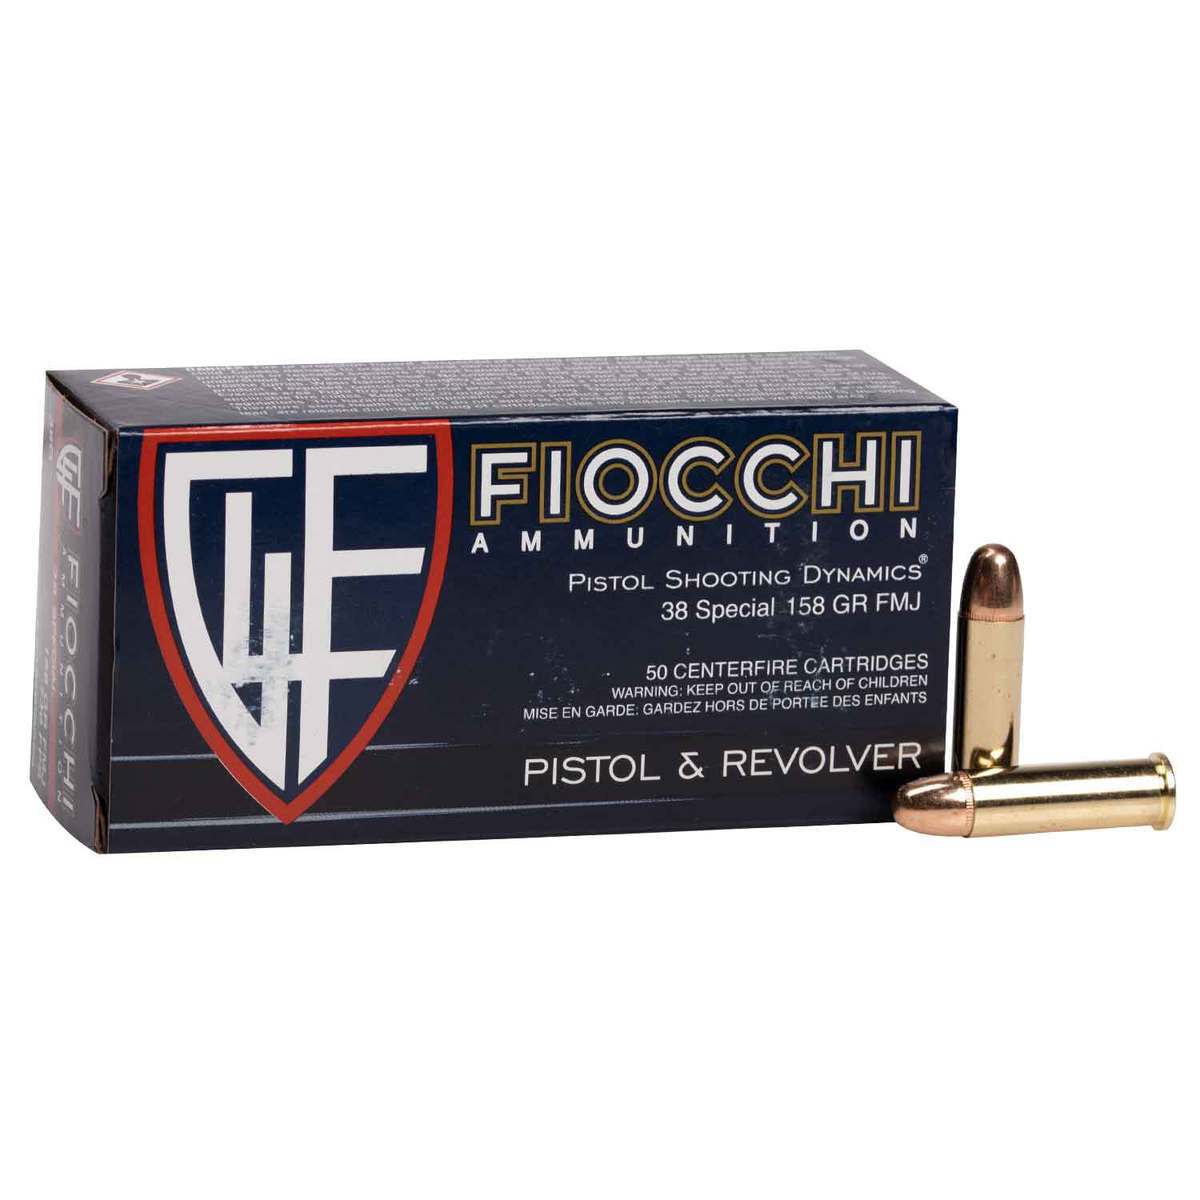 Fiocchi Training Dynamics 38 Special 158gr FMJ Handgun Ammo - 50 Rounds